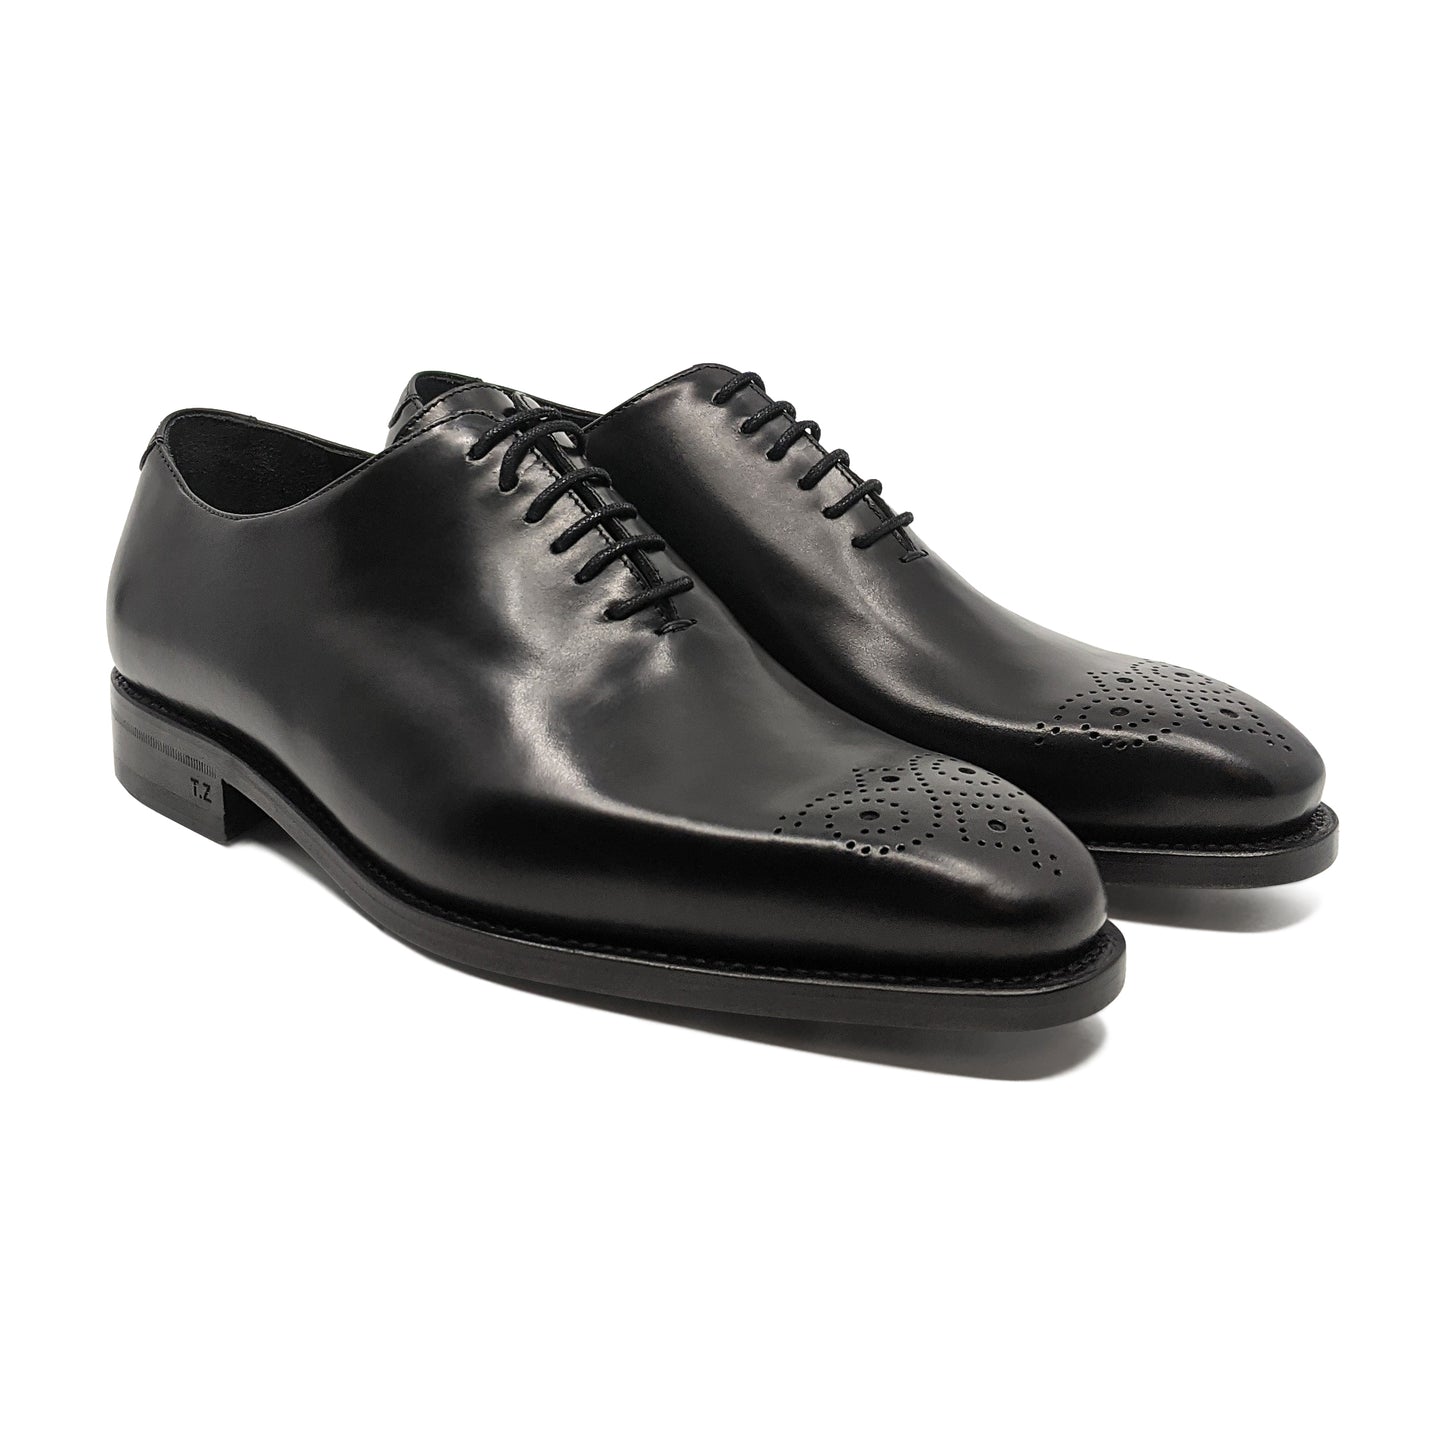 Black wholecut leather shoe goodyear welt